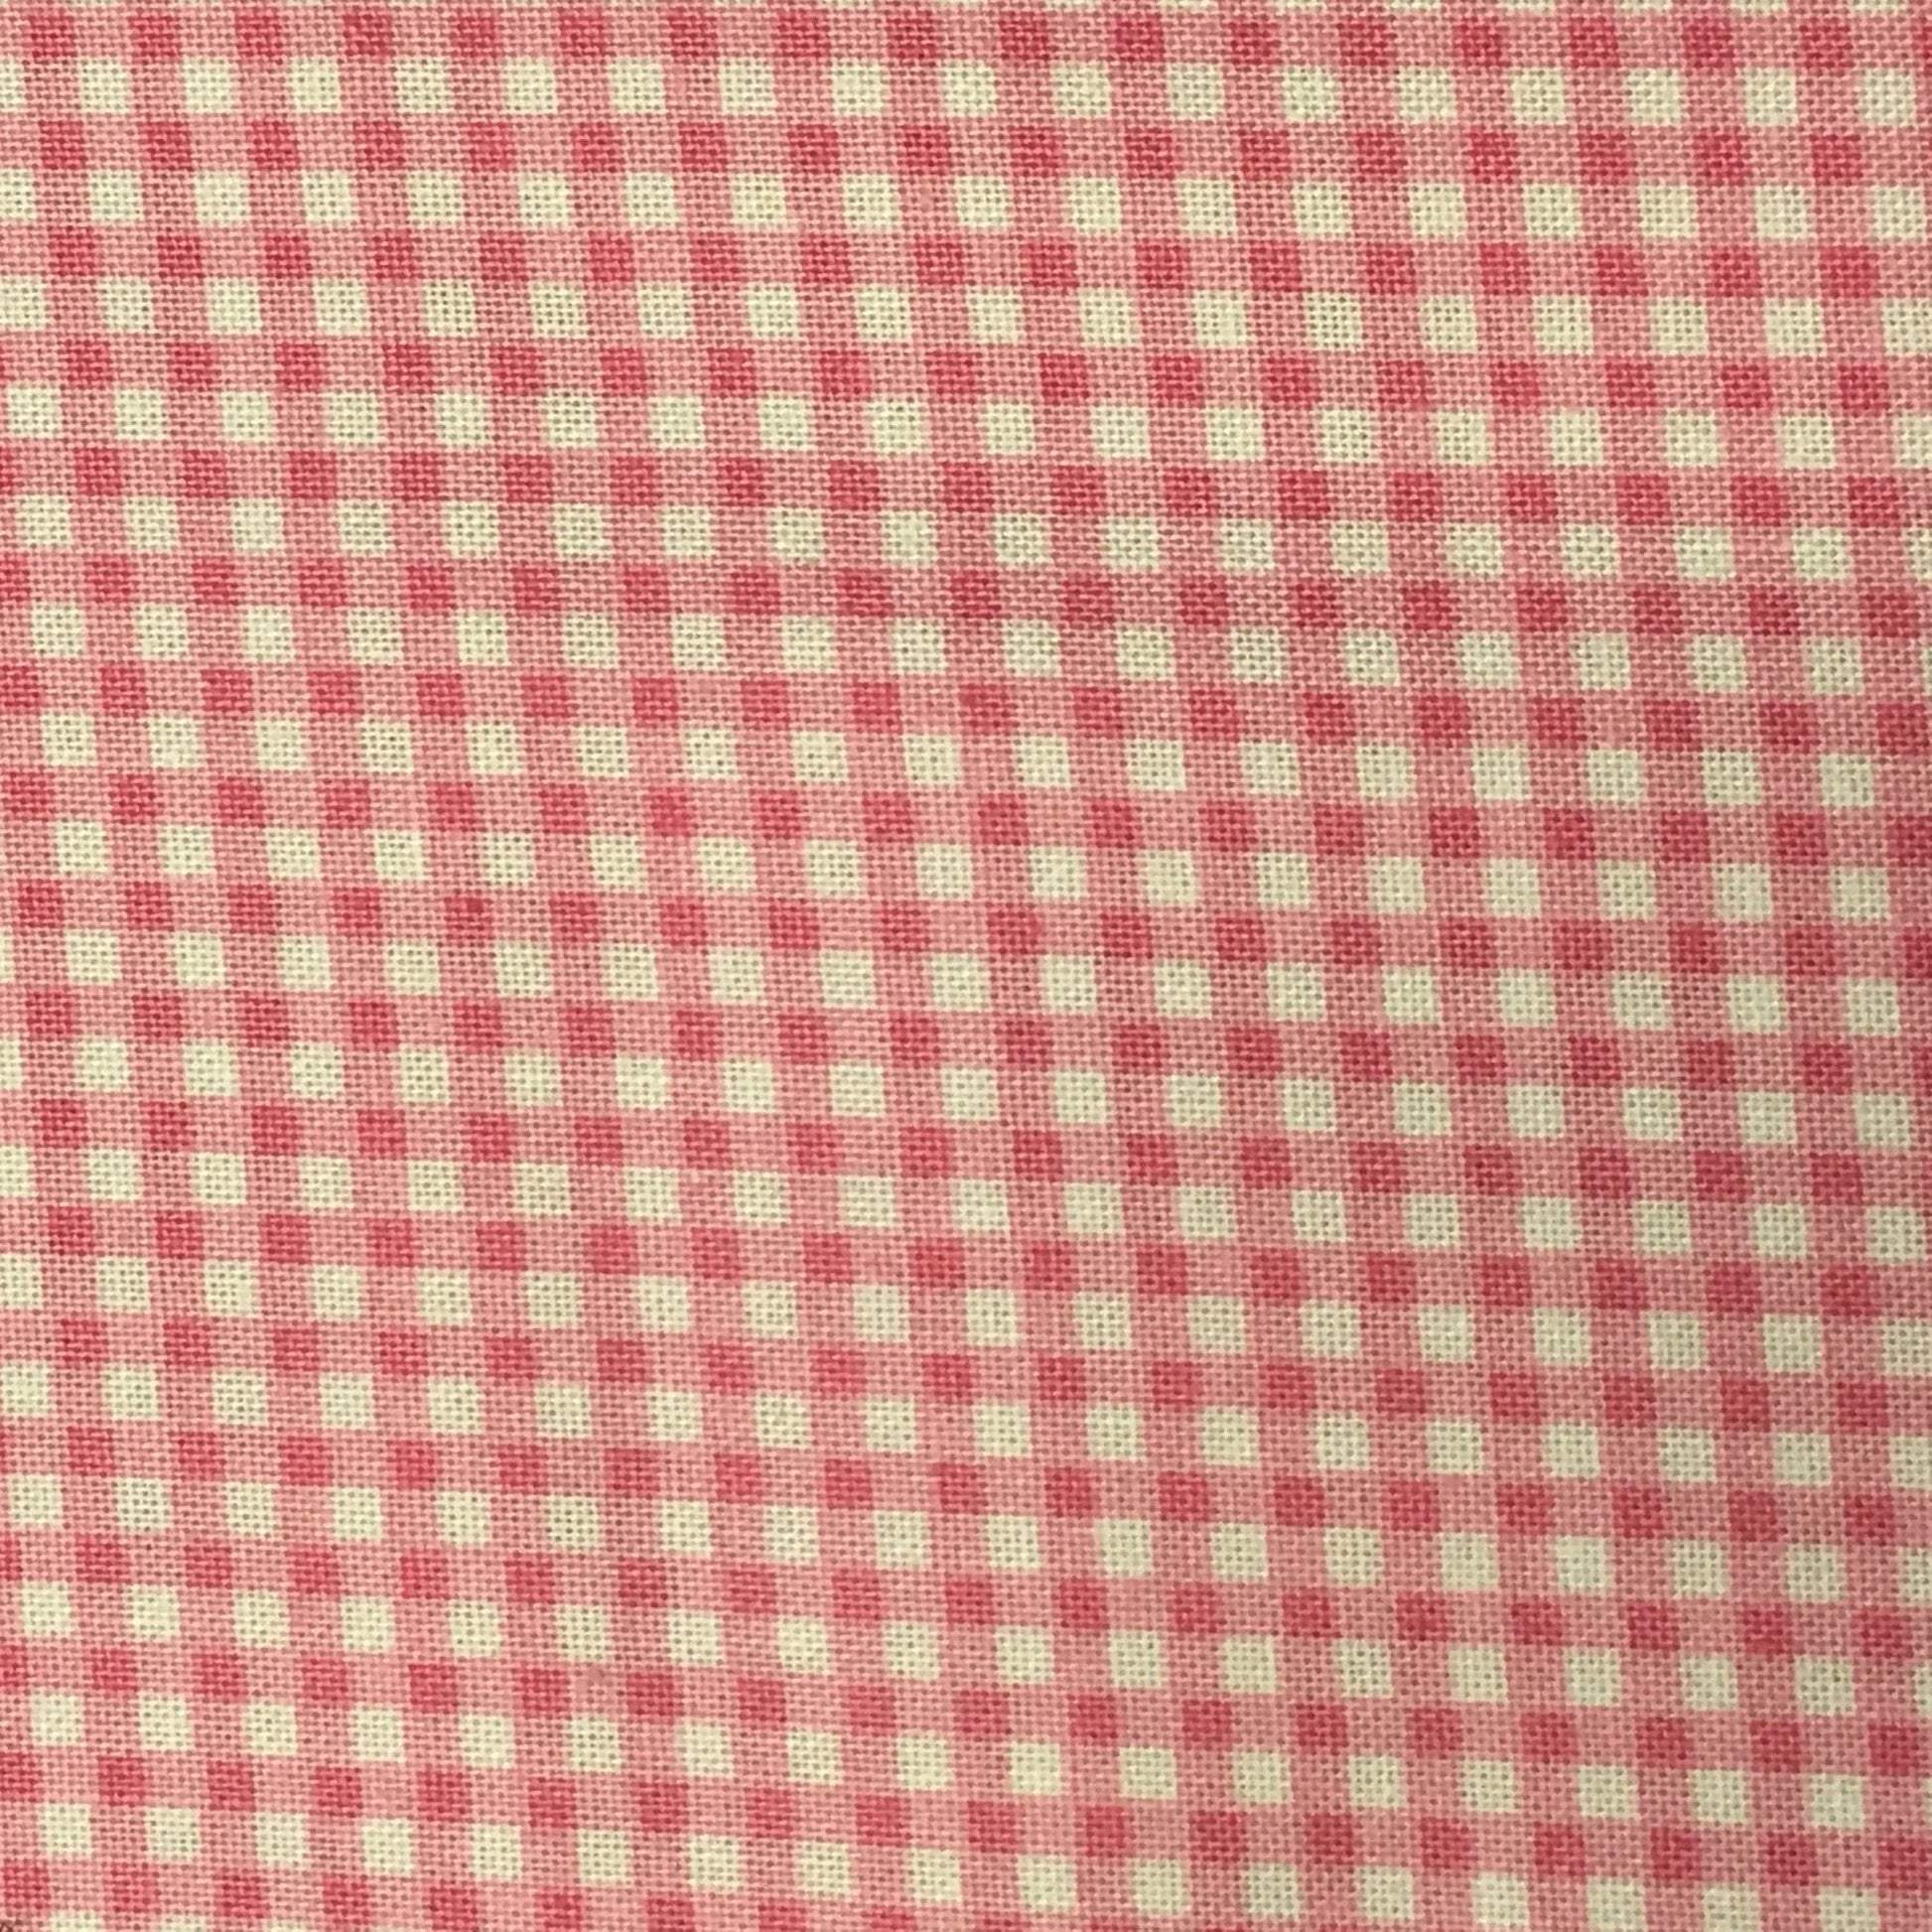 Fabric Felt - 1/8" Gingham - Pink